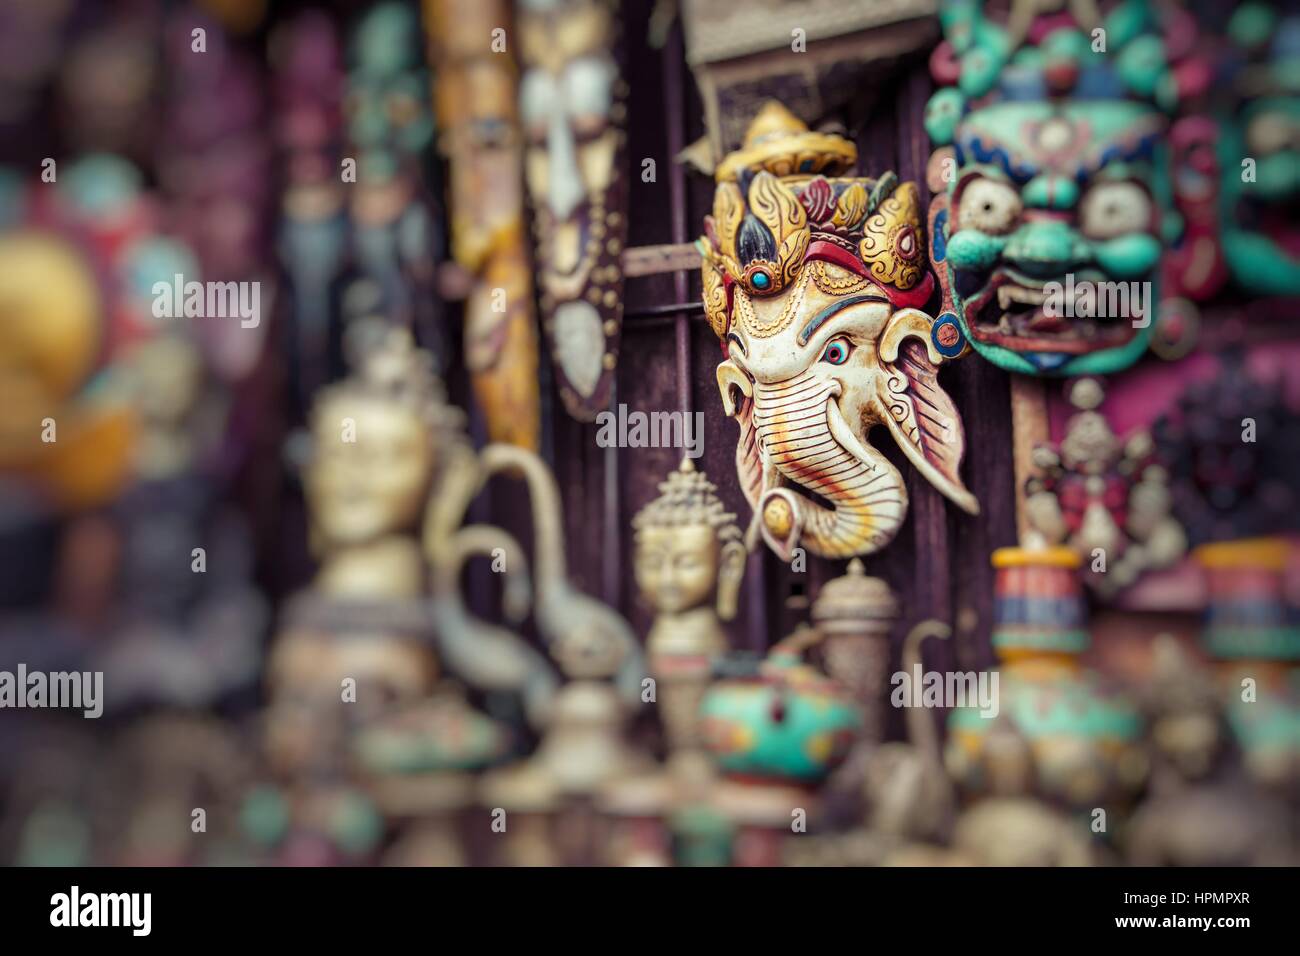 Souvenirs in street shop at Durbar Square in Kathmandu, Nepal. Stock Photo